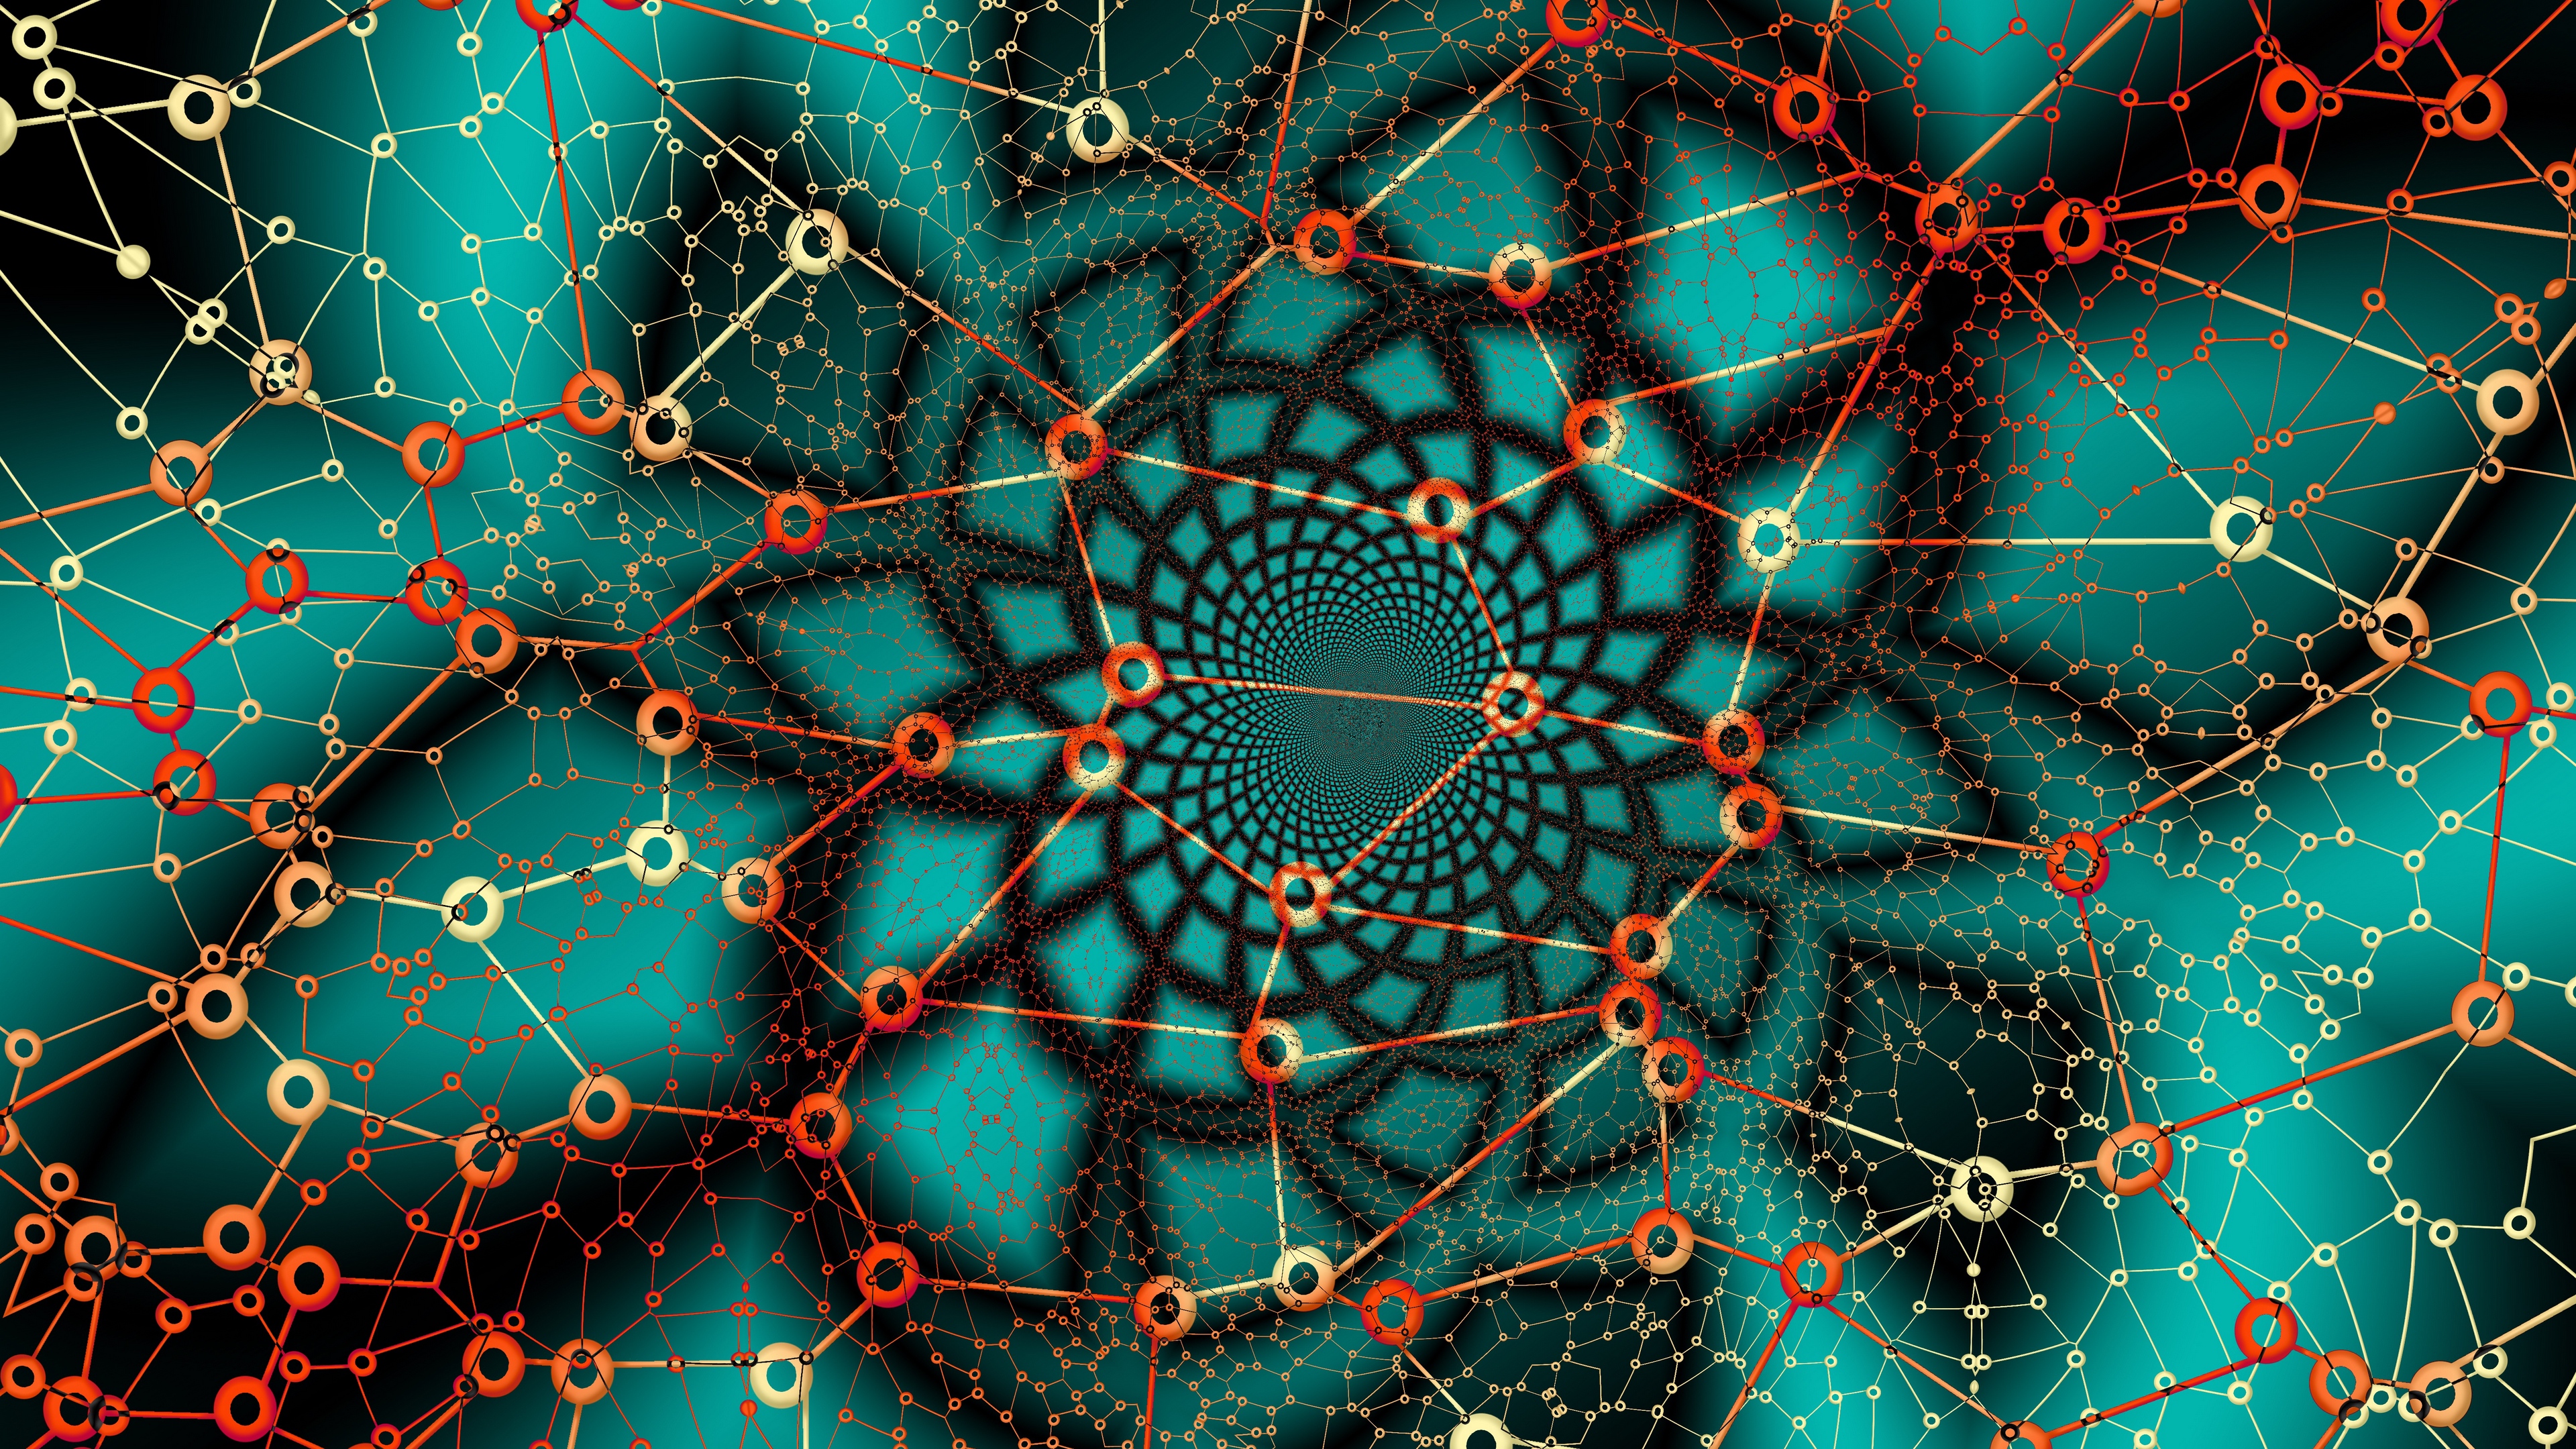 network lines shapes patterns 4k 1539369841 - network, lines, shapes, patterns 4k - Shapes, Network, Lines